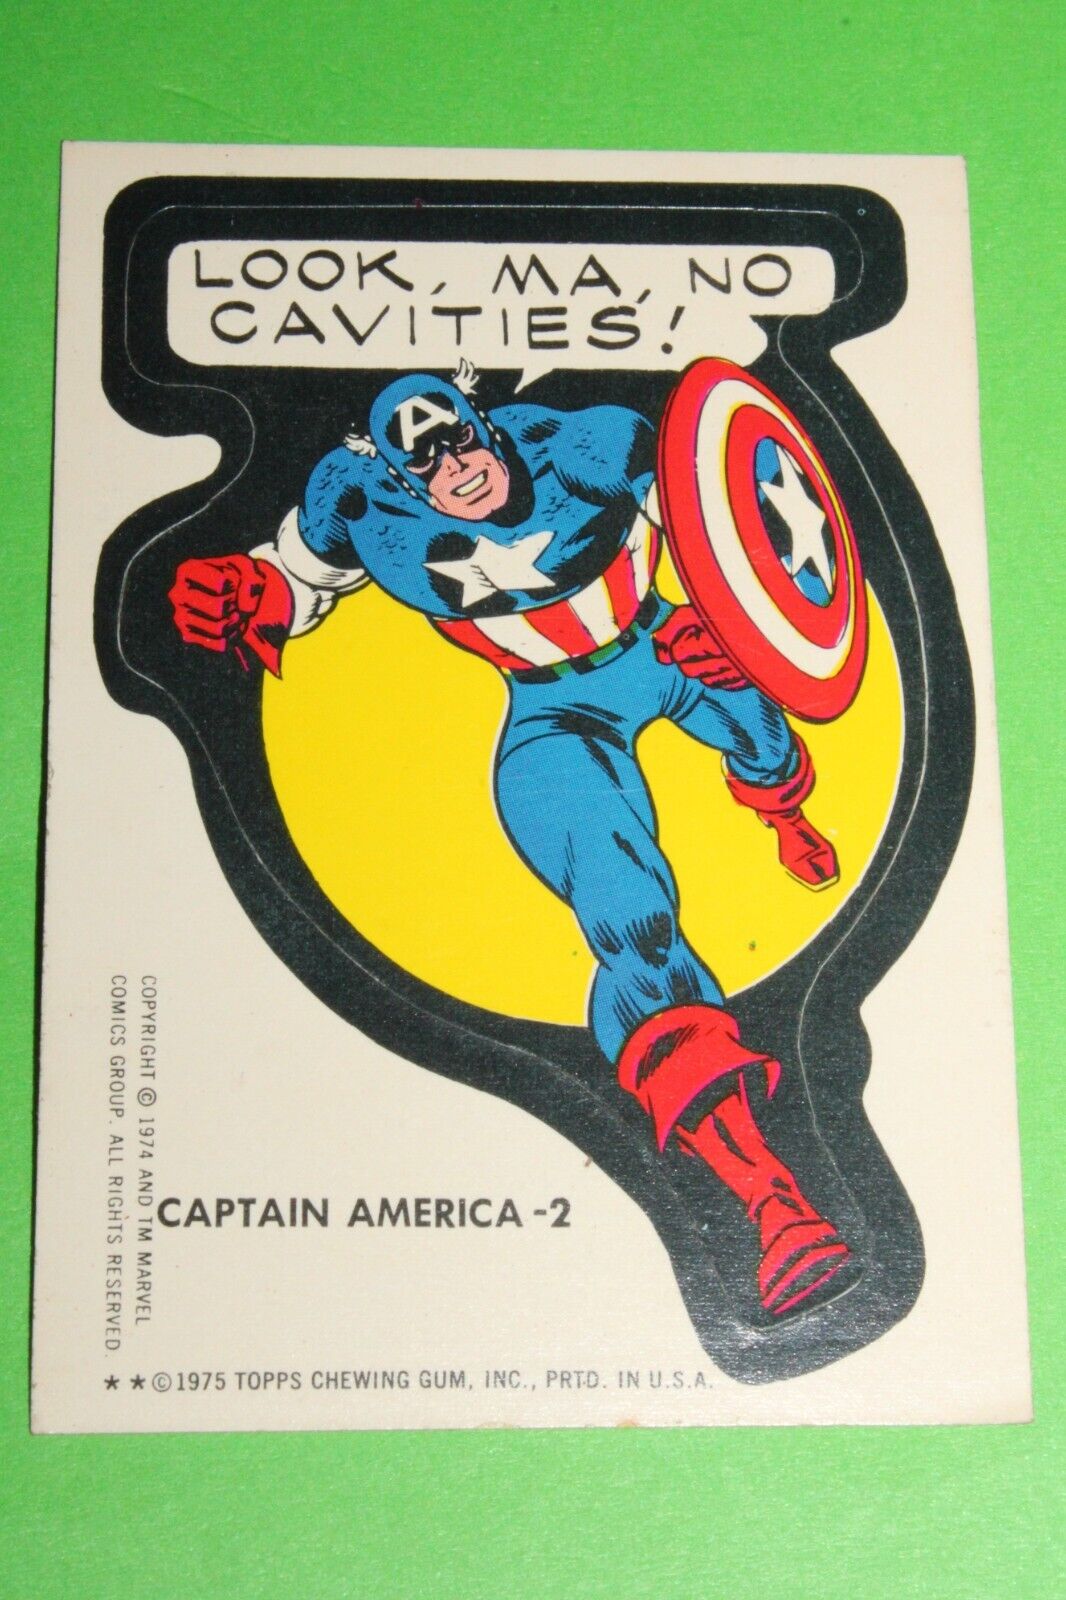 1974 1975 TOPPS MARVEL SUPER HEROES STICKERS CAPTAIN AMERICA 2 LOOK, NO CAVITIES